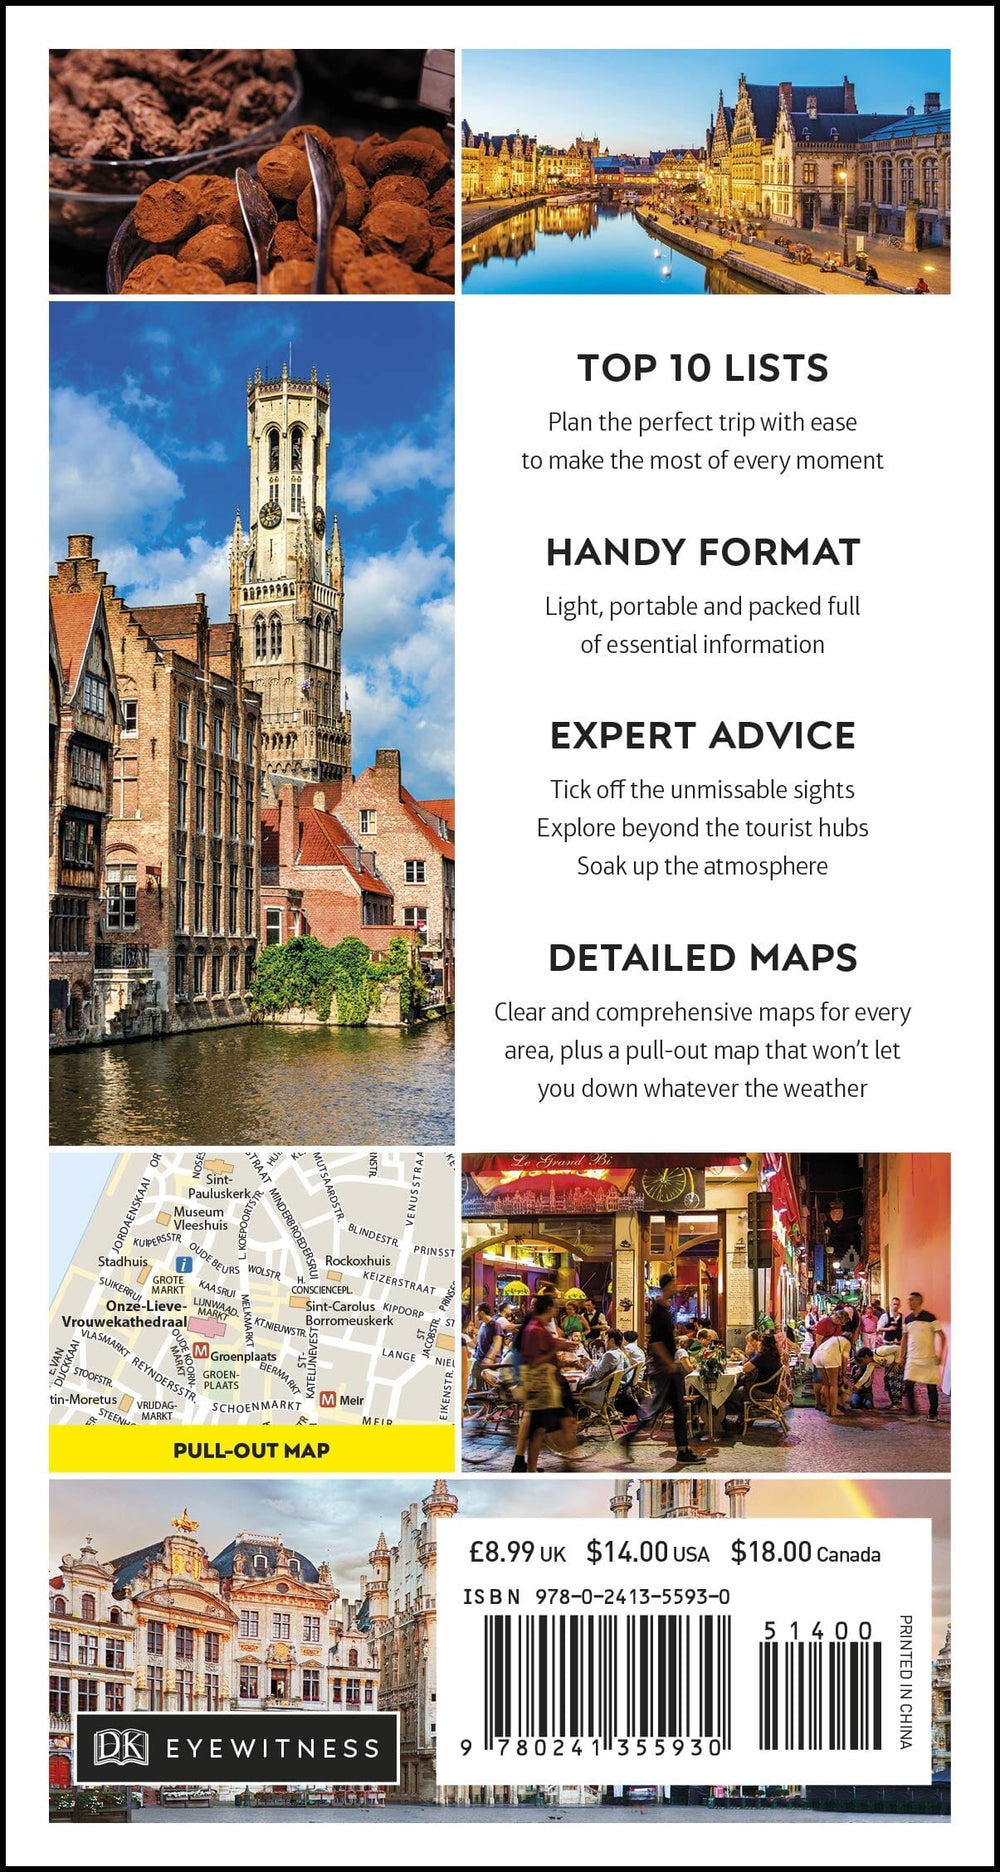 Guide de voyage (en anglais) - Brussels - Bruges - Antwerp & Ghent Top 10 | Eyewitness guide de conversation Eyewitness 